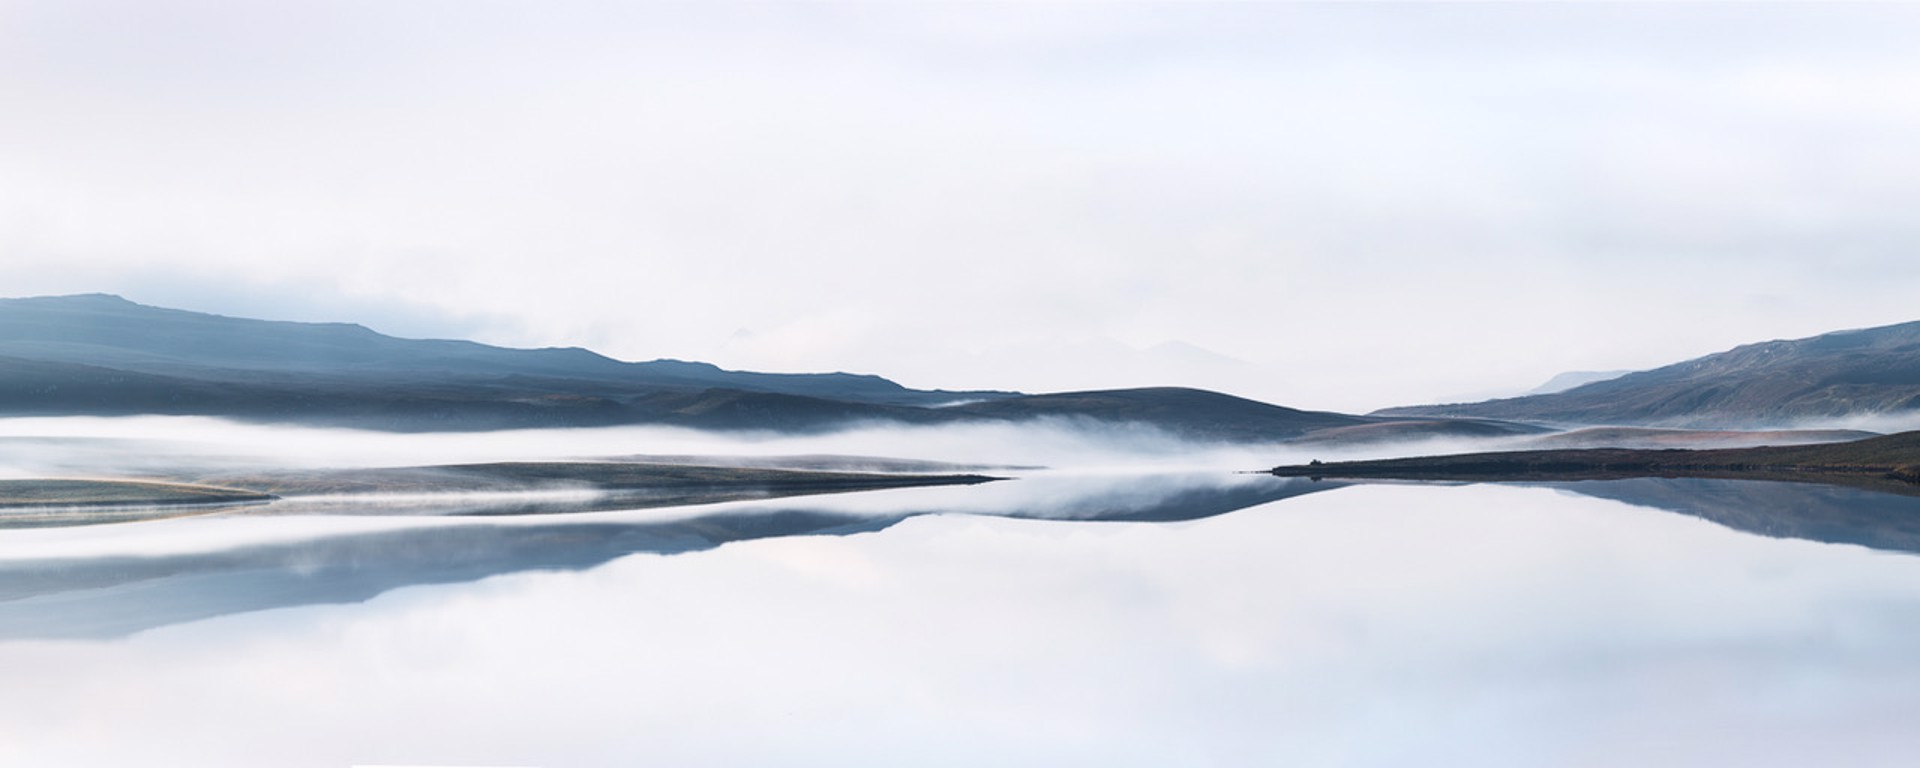 Serenity, Scotland 2015 by Jean-Michel Lenoir